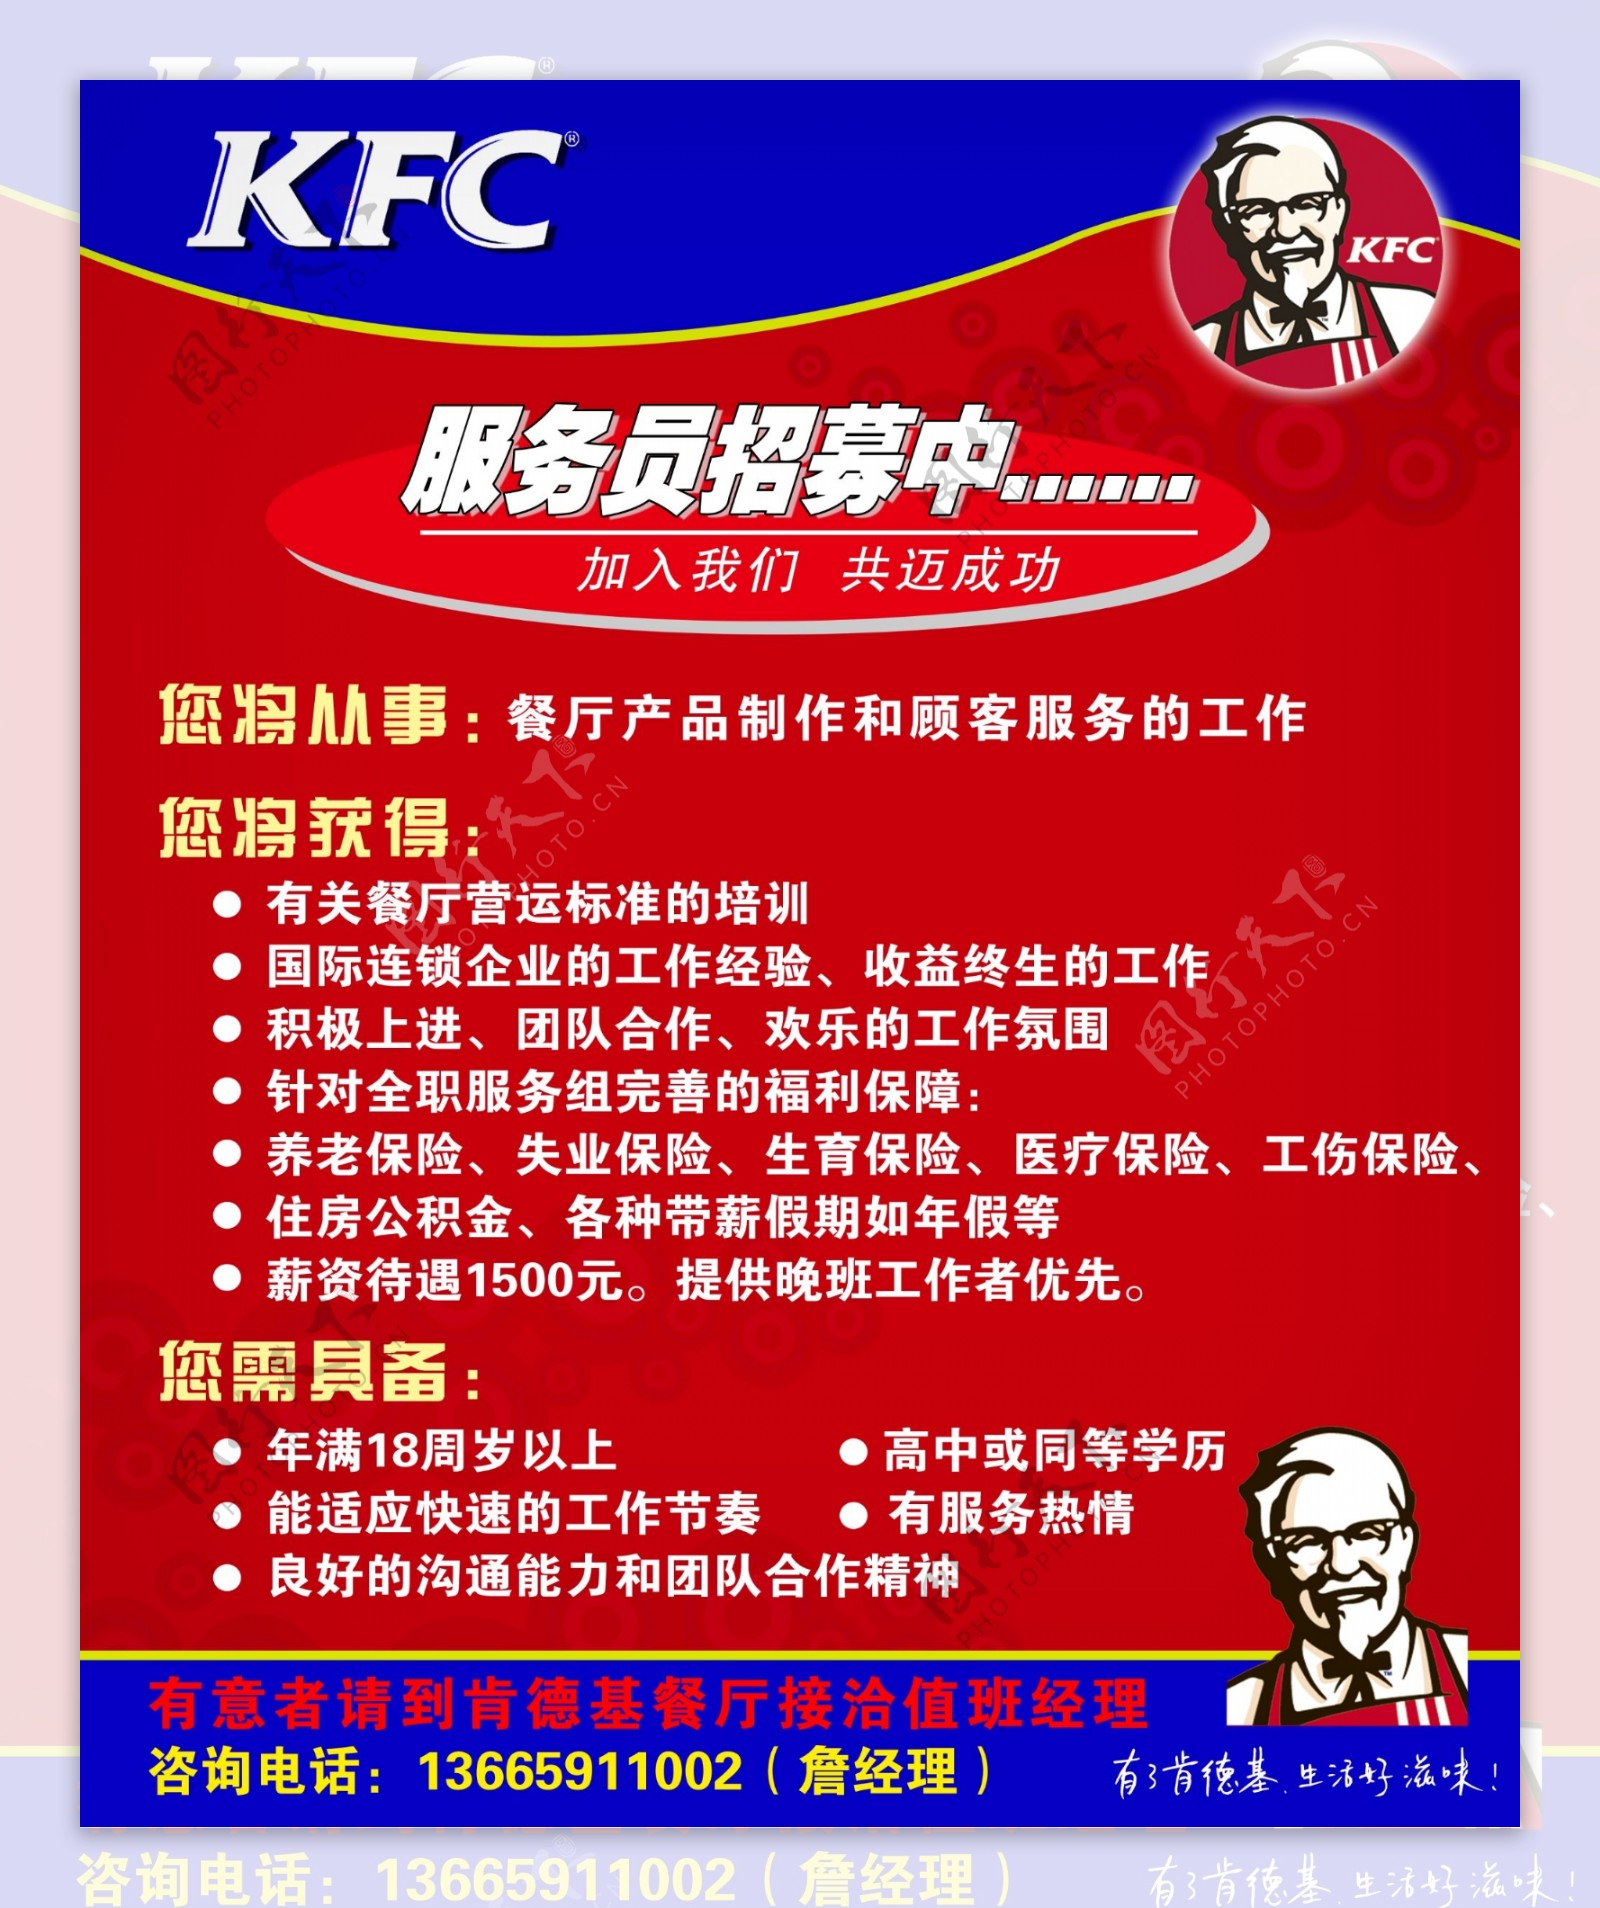 KFC招募图片